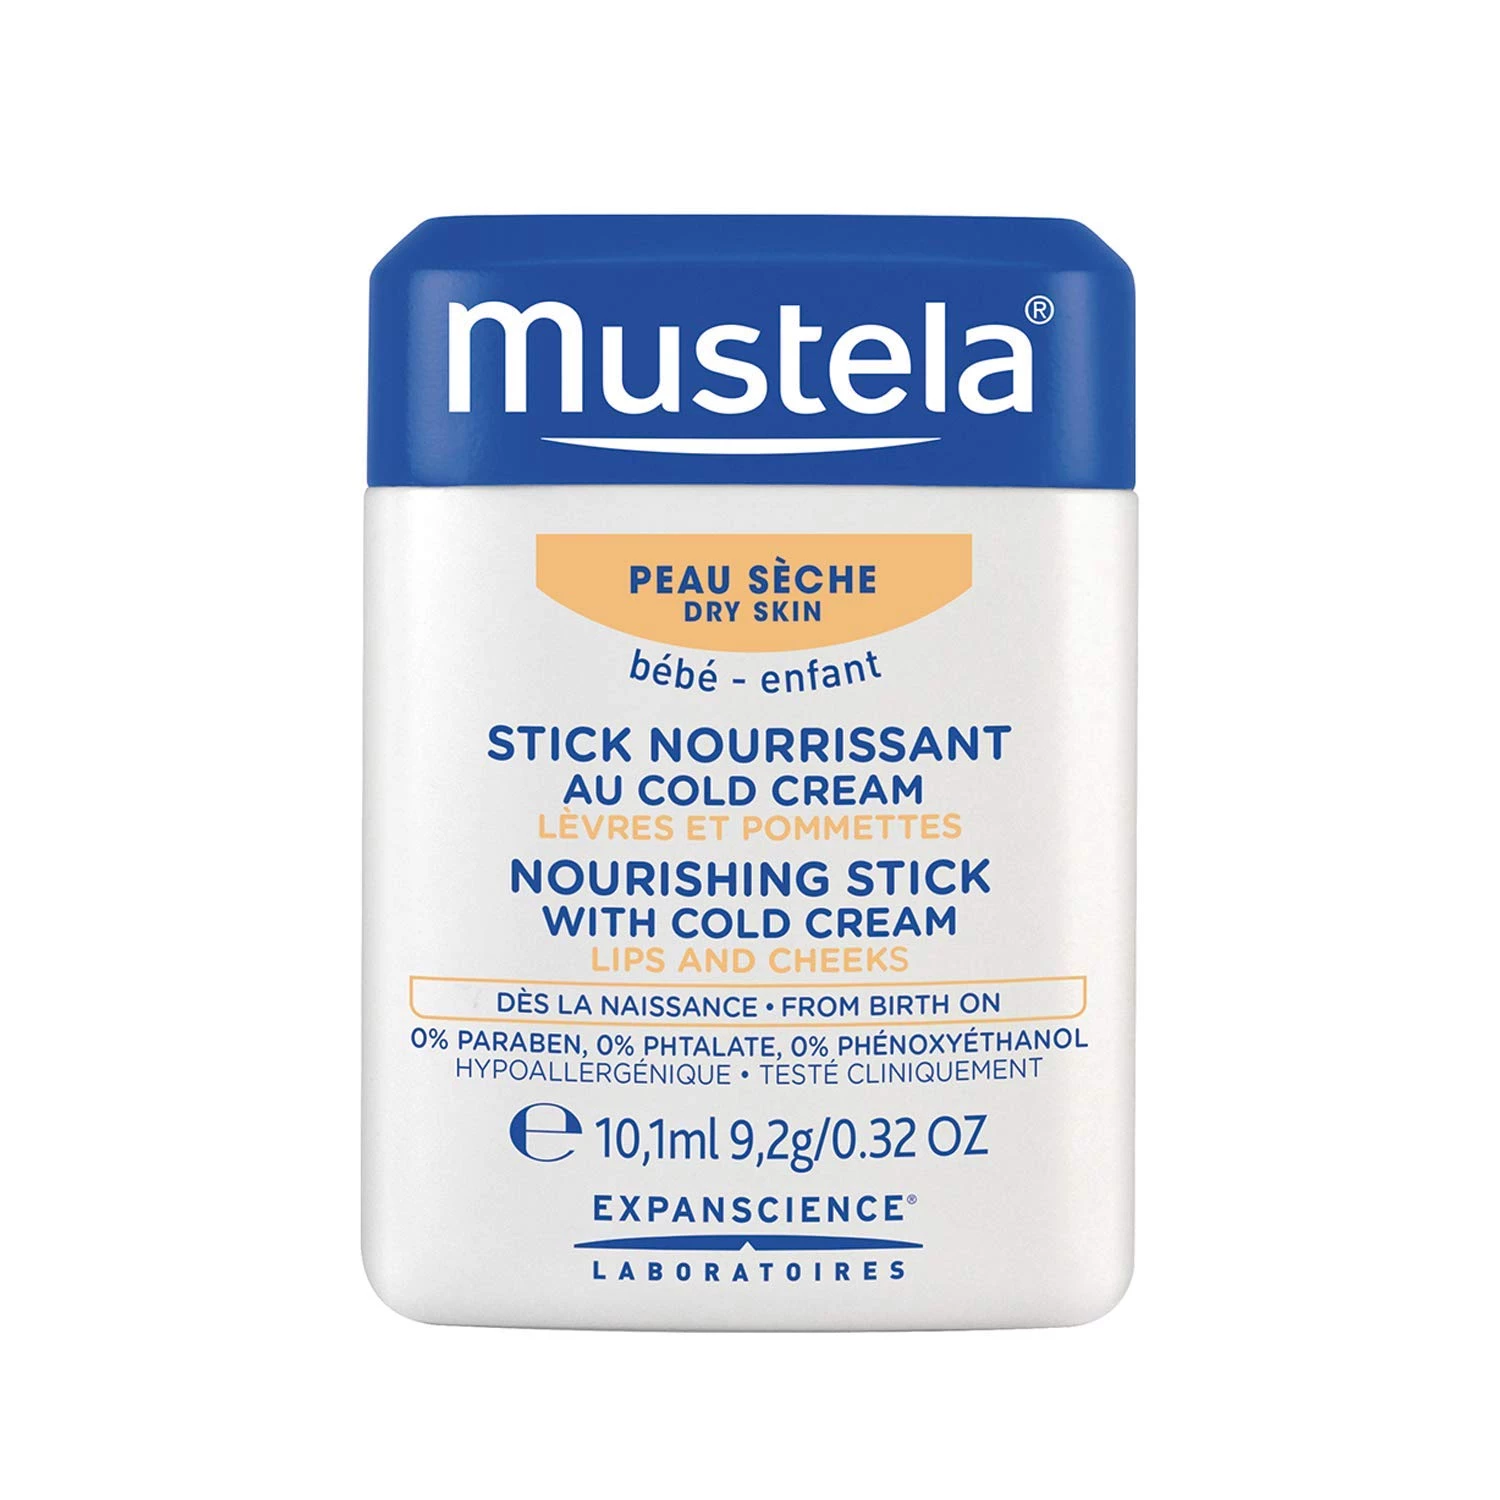 Mustela Nourishing Stick With Cold Cream 10g